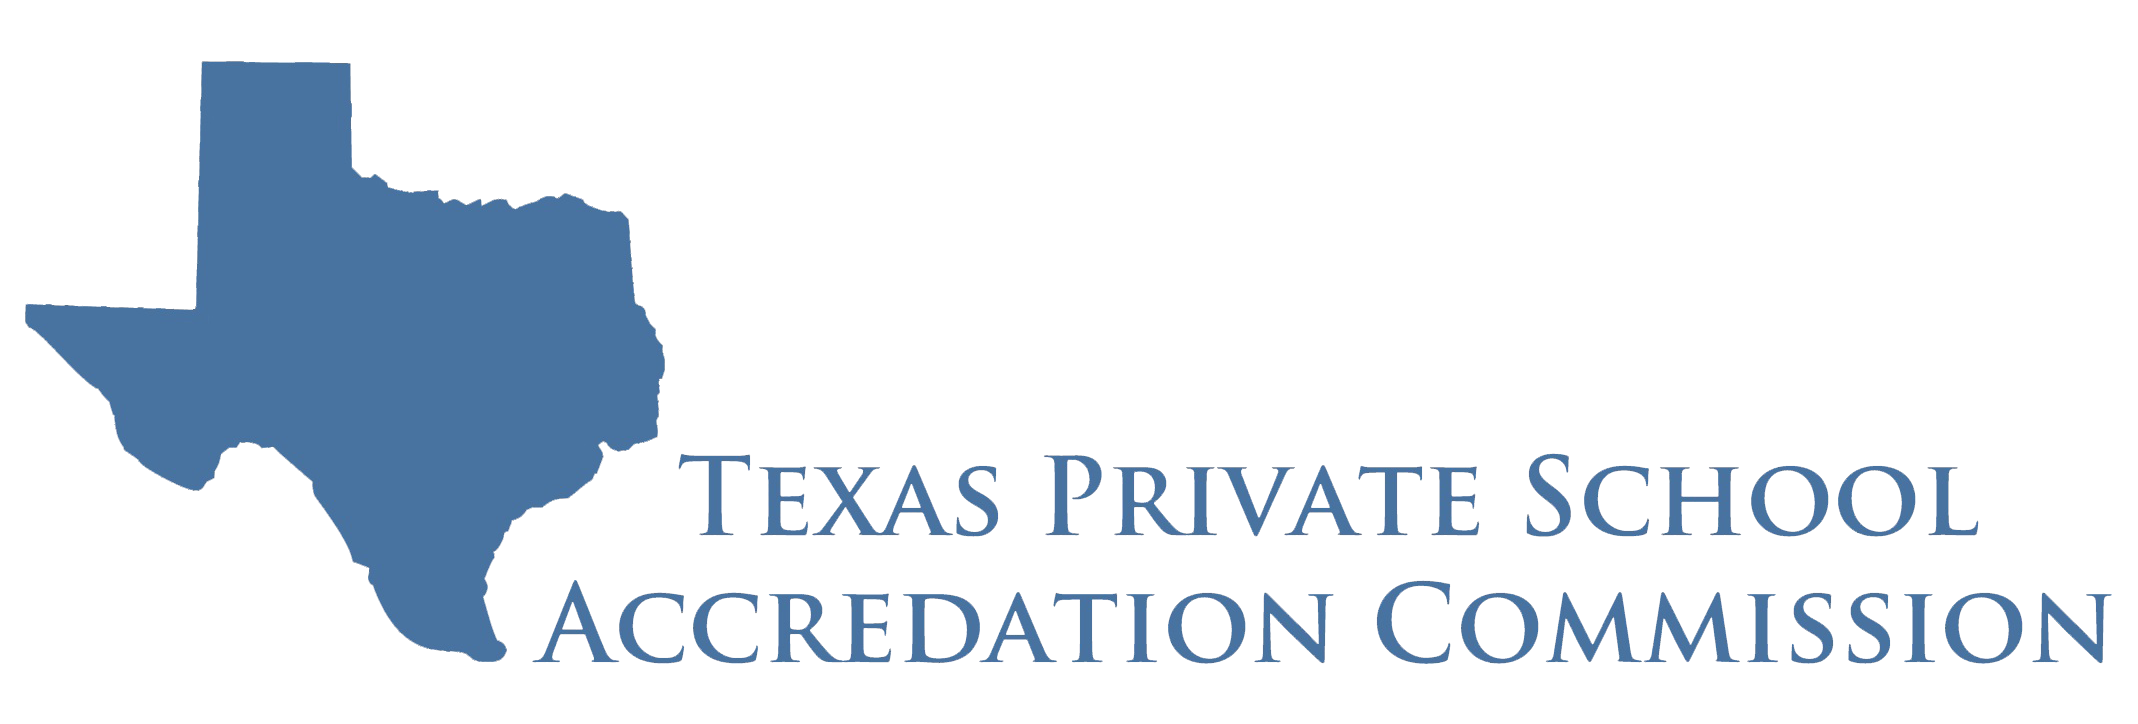 Texas Private School Accreditation Commission Logo